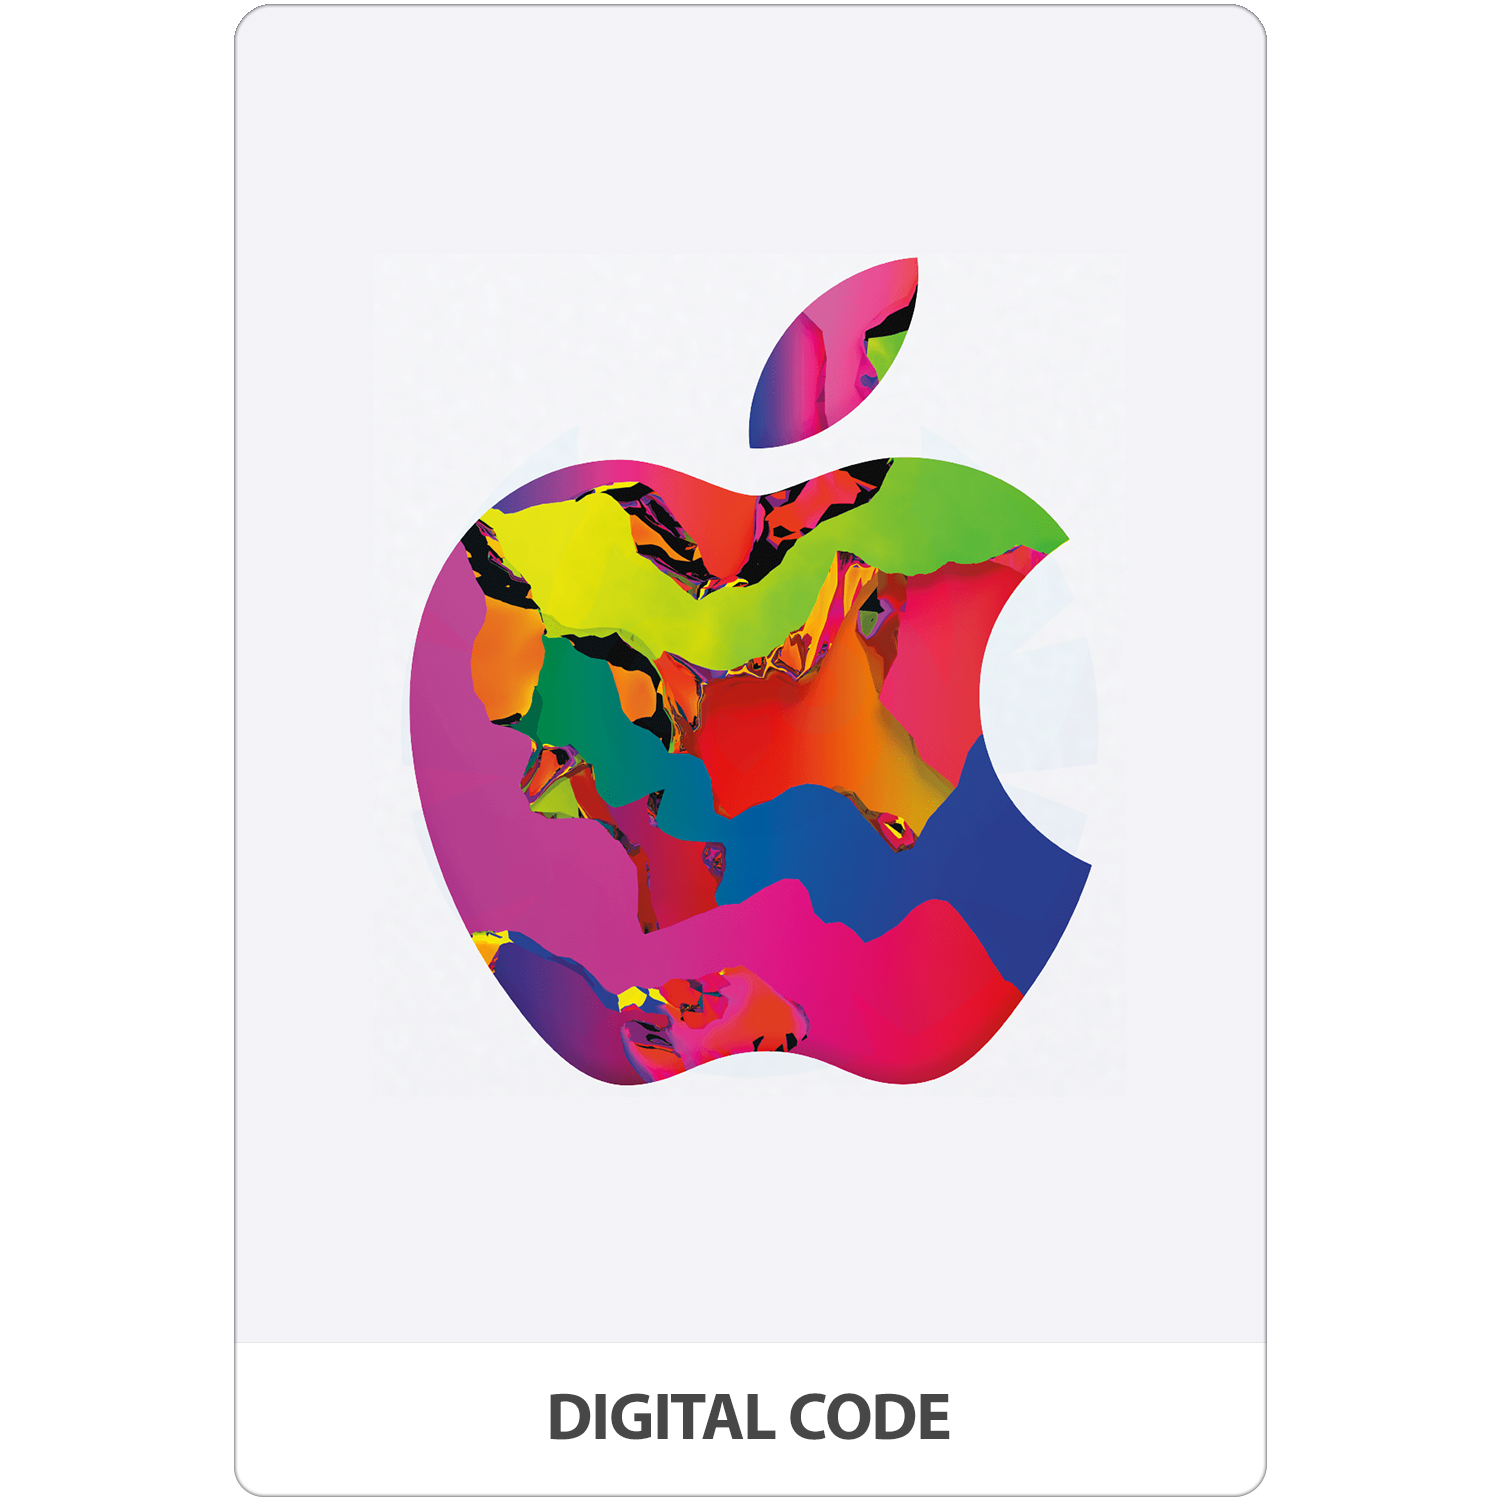 Buy Apple iTunes Gift Card 25 TL iTunes Key TURKEY - Cheap - !